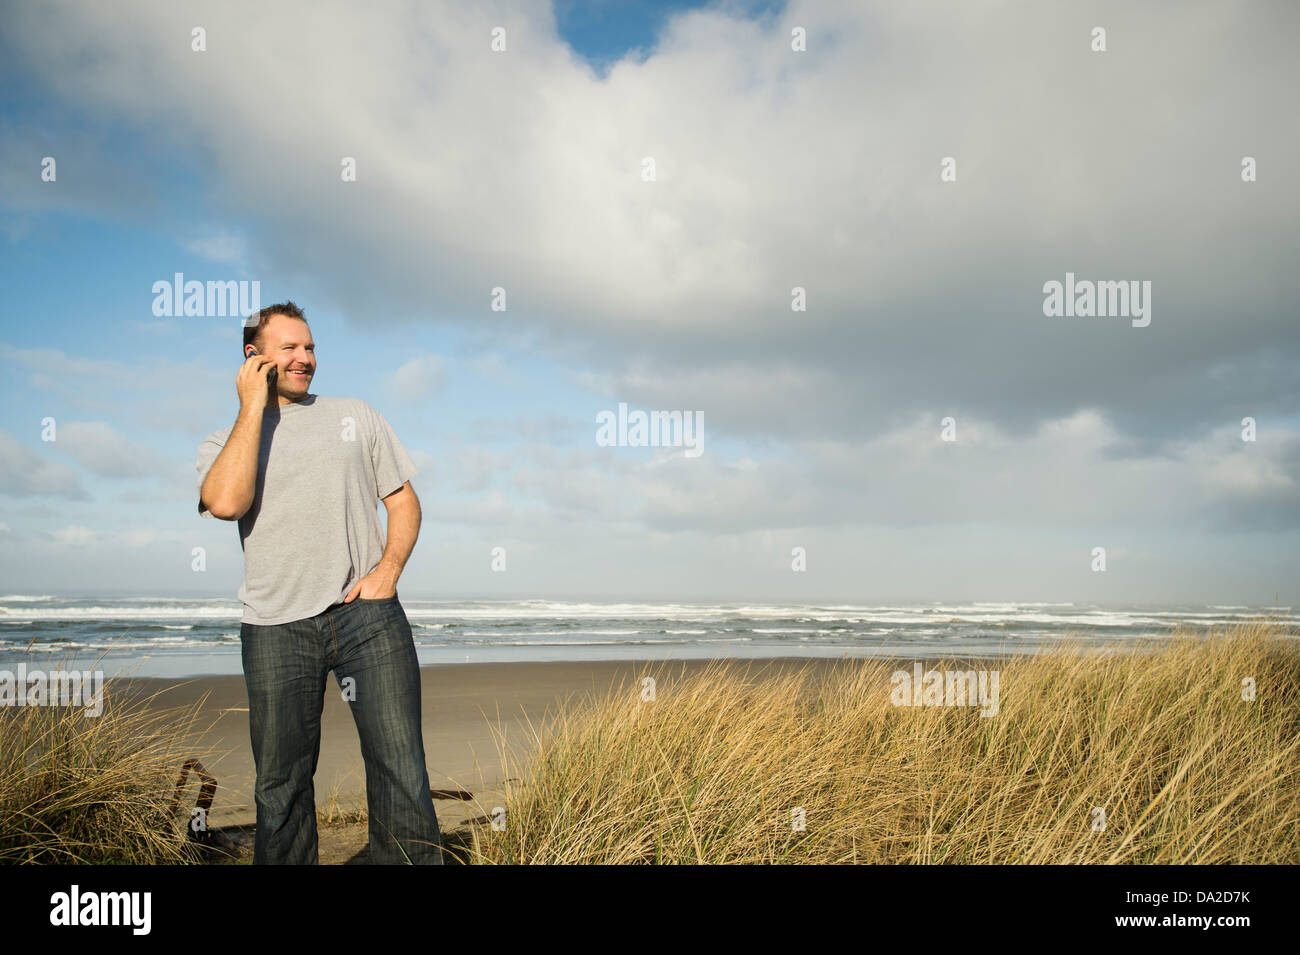 USA, Oregon, Rockaway Beach, Mann am Telefon stehen am Strand Stockfoto